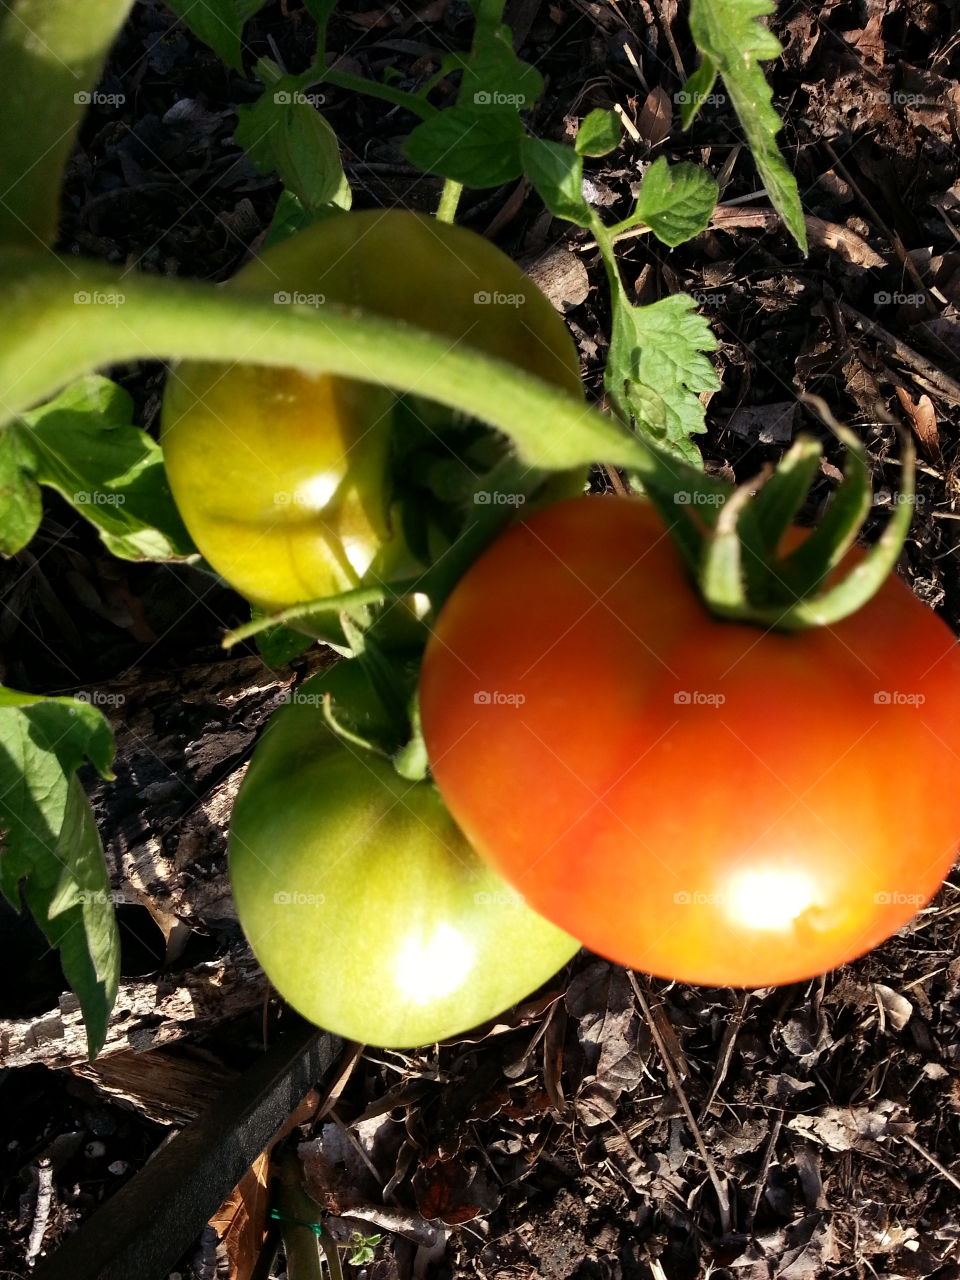 Garden Tomato s. May 28 2015 Garden Tomatoes